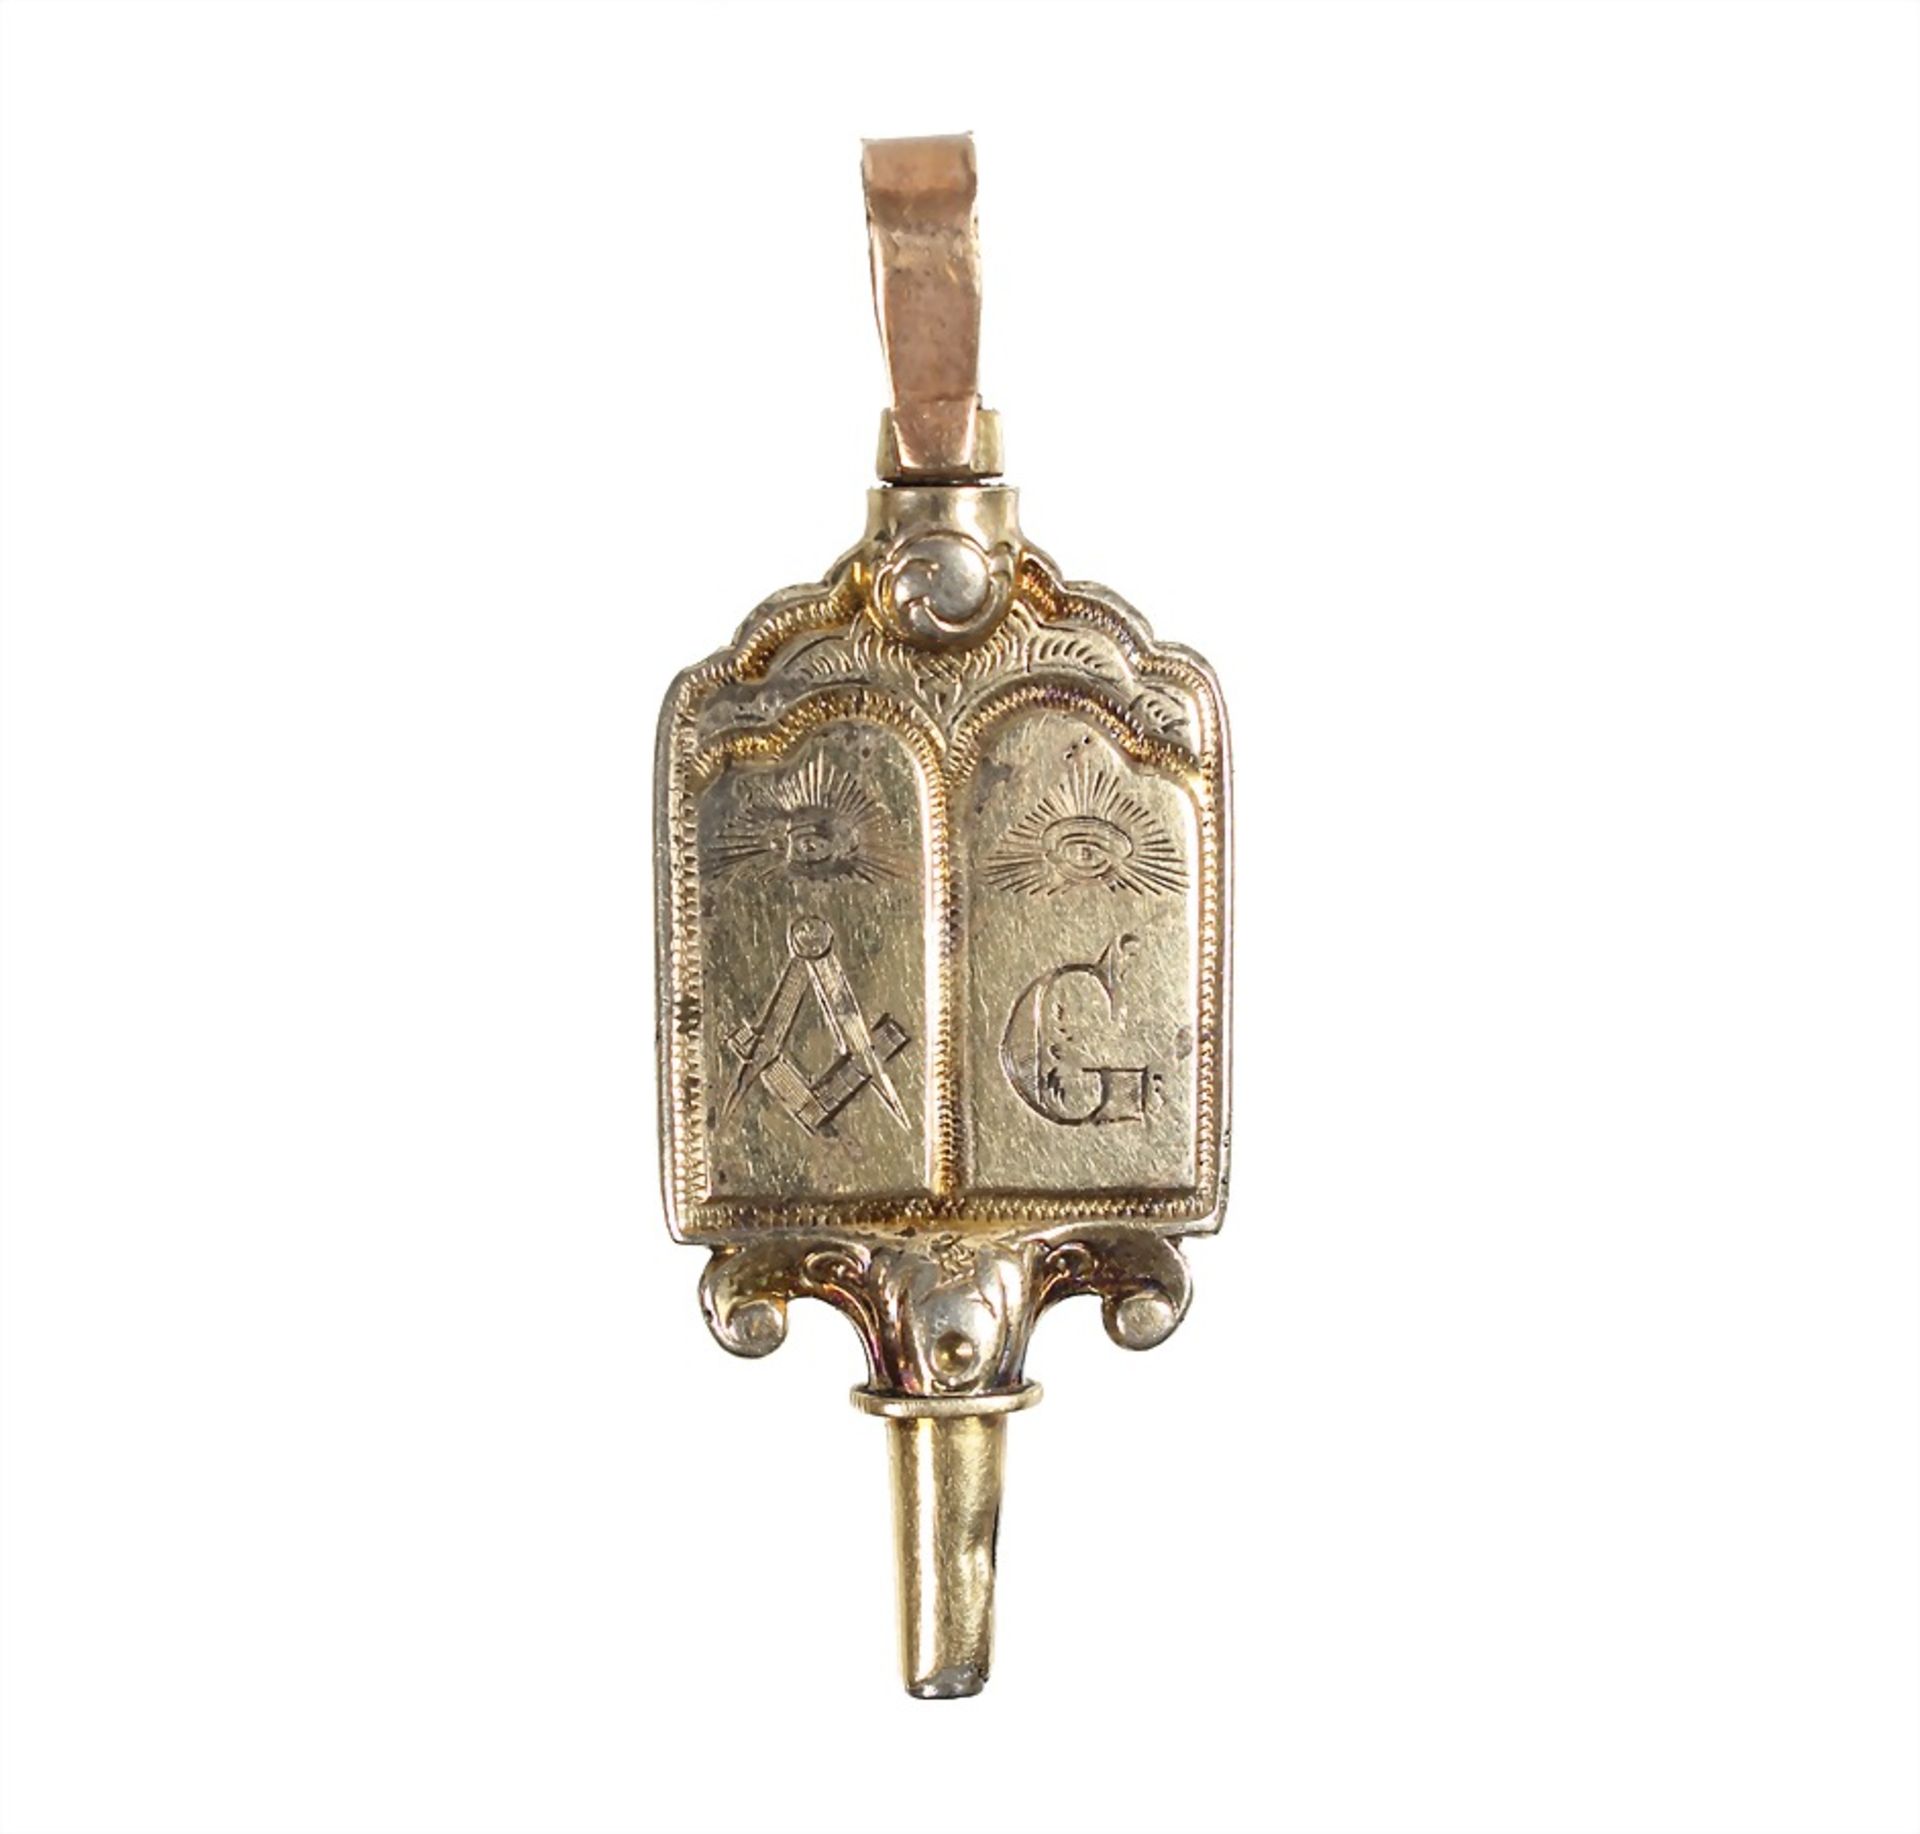 clock key, Freemason second half of the 19th century, fire-gilded, "BUCH DER WEISHEIT", Freemason